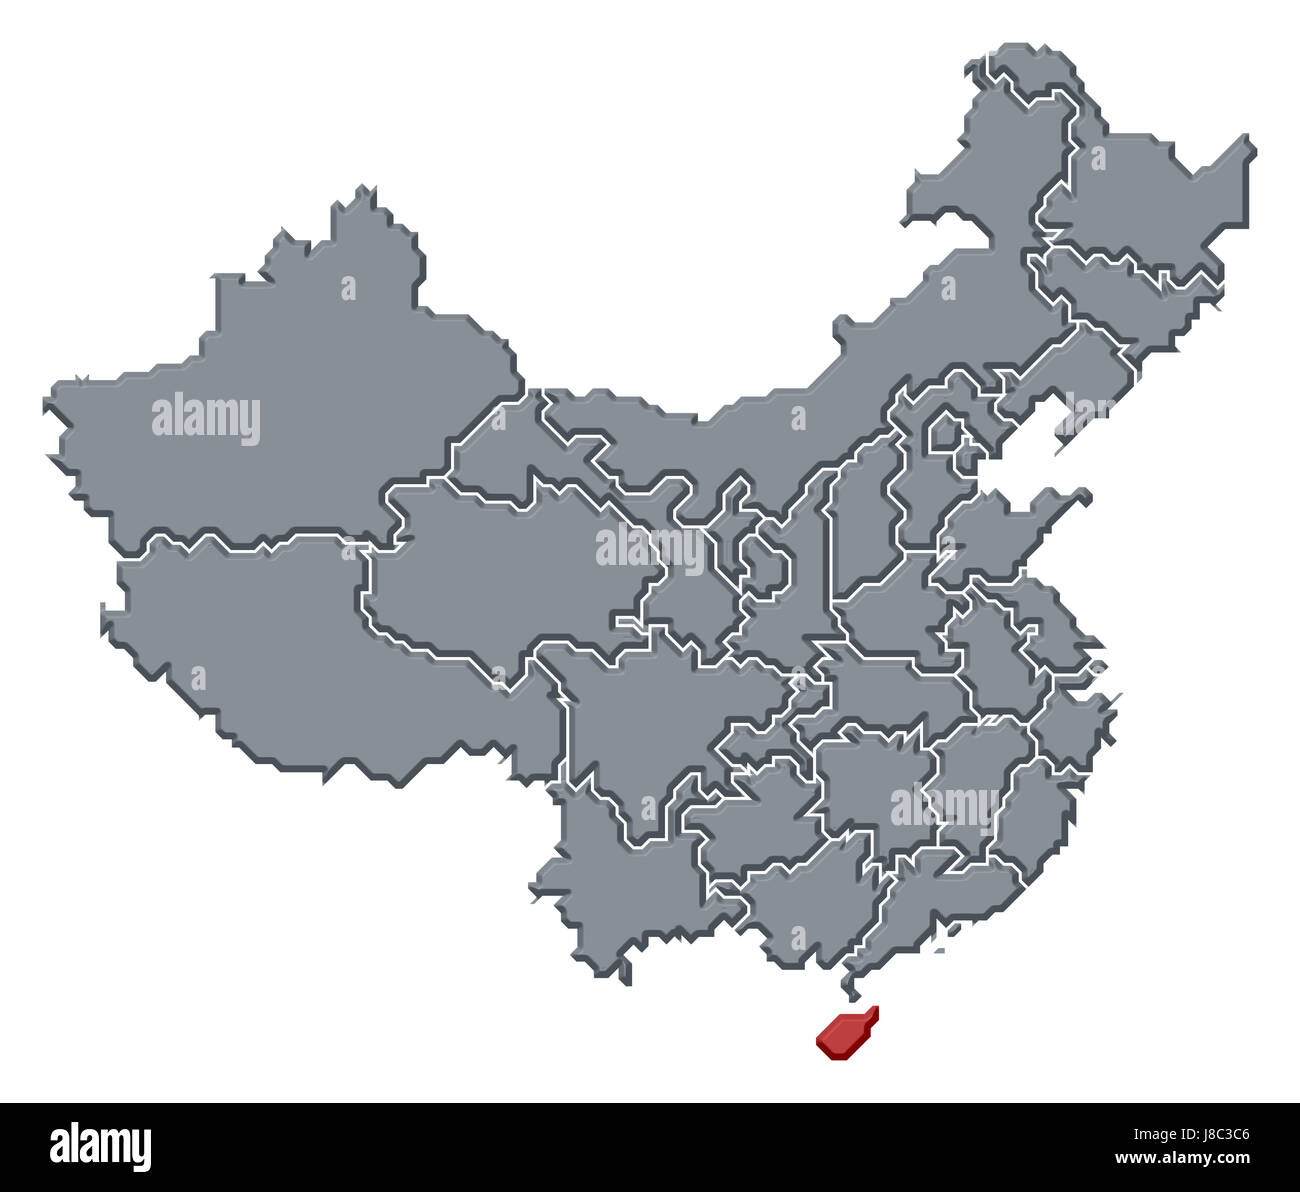 china, map, atlas, map of the world, profile, symbolic, political, colour, Stock Photo